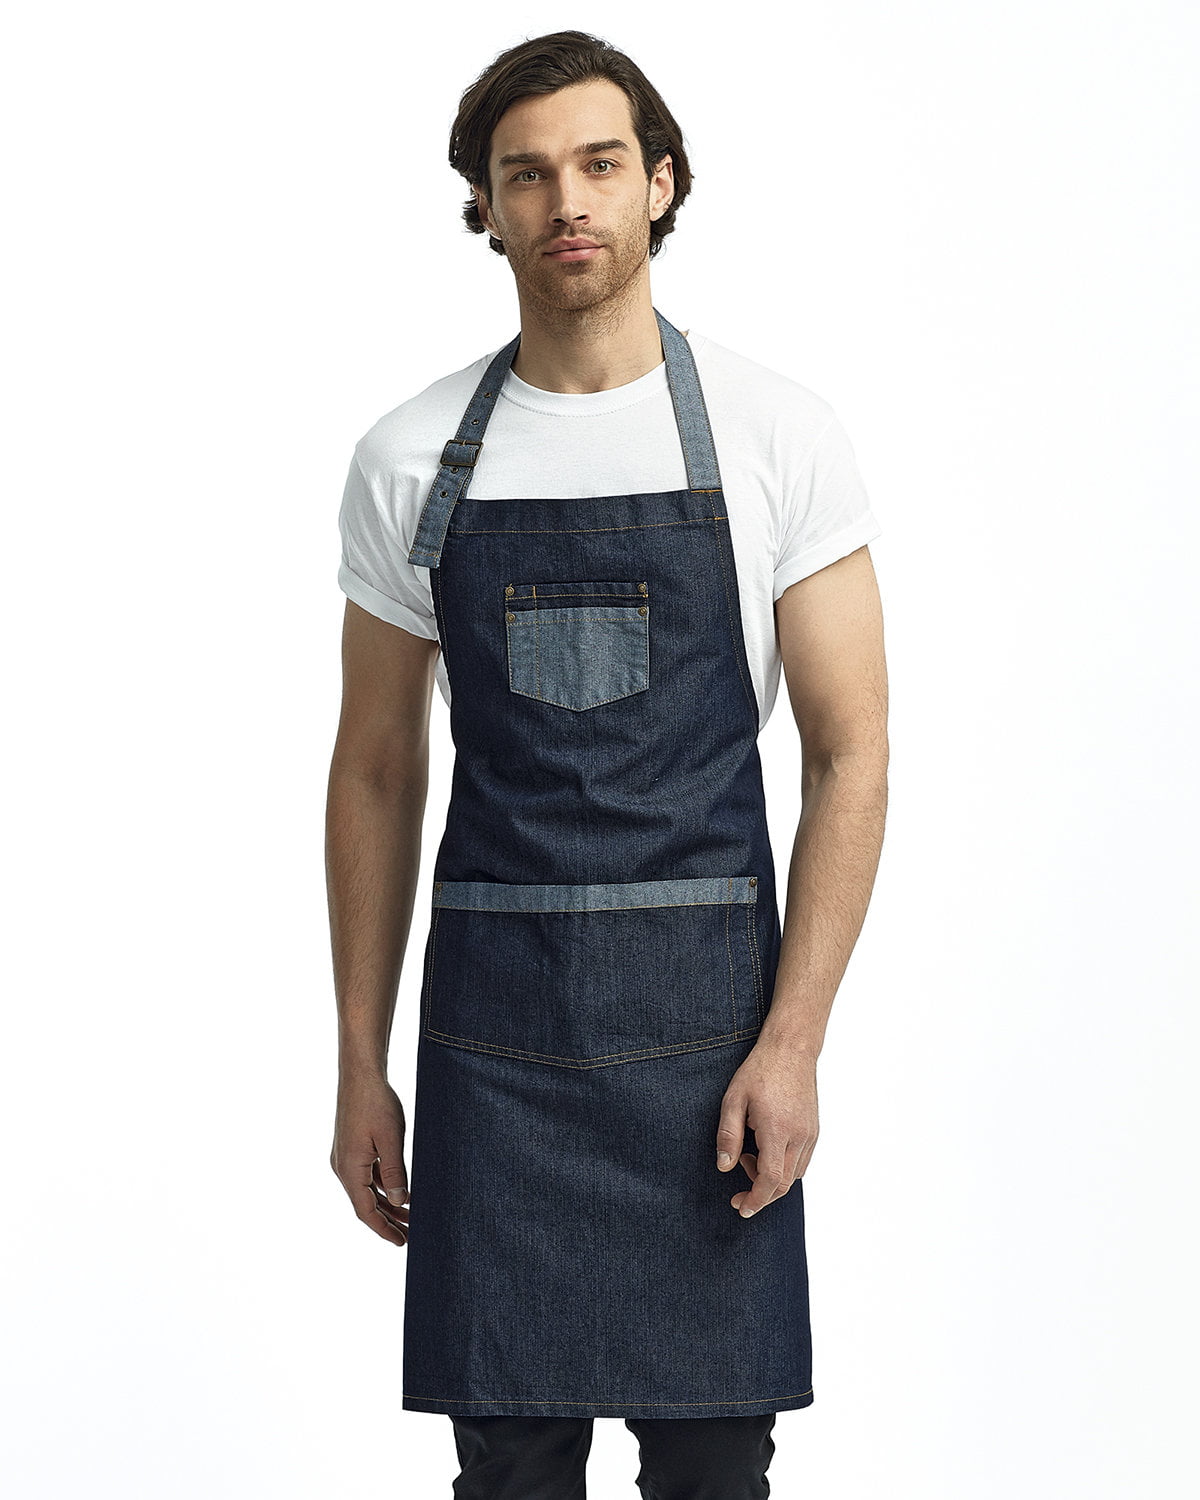 Unisex Contrast Bib Apron Cooking Baking Chef Kitchen Catering Uniform Workwear 